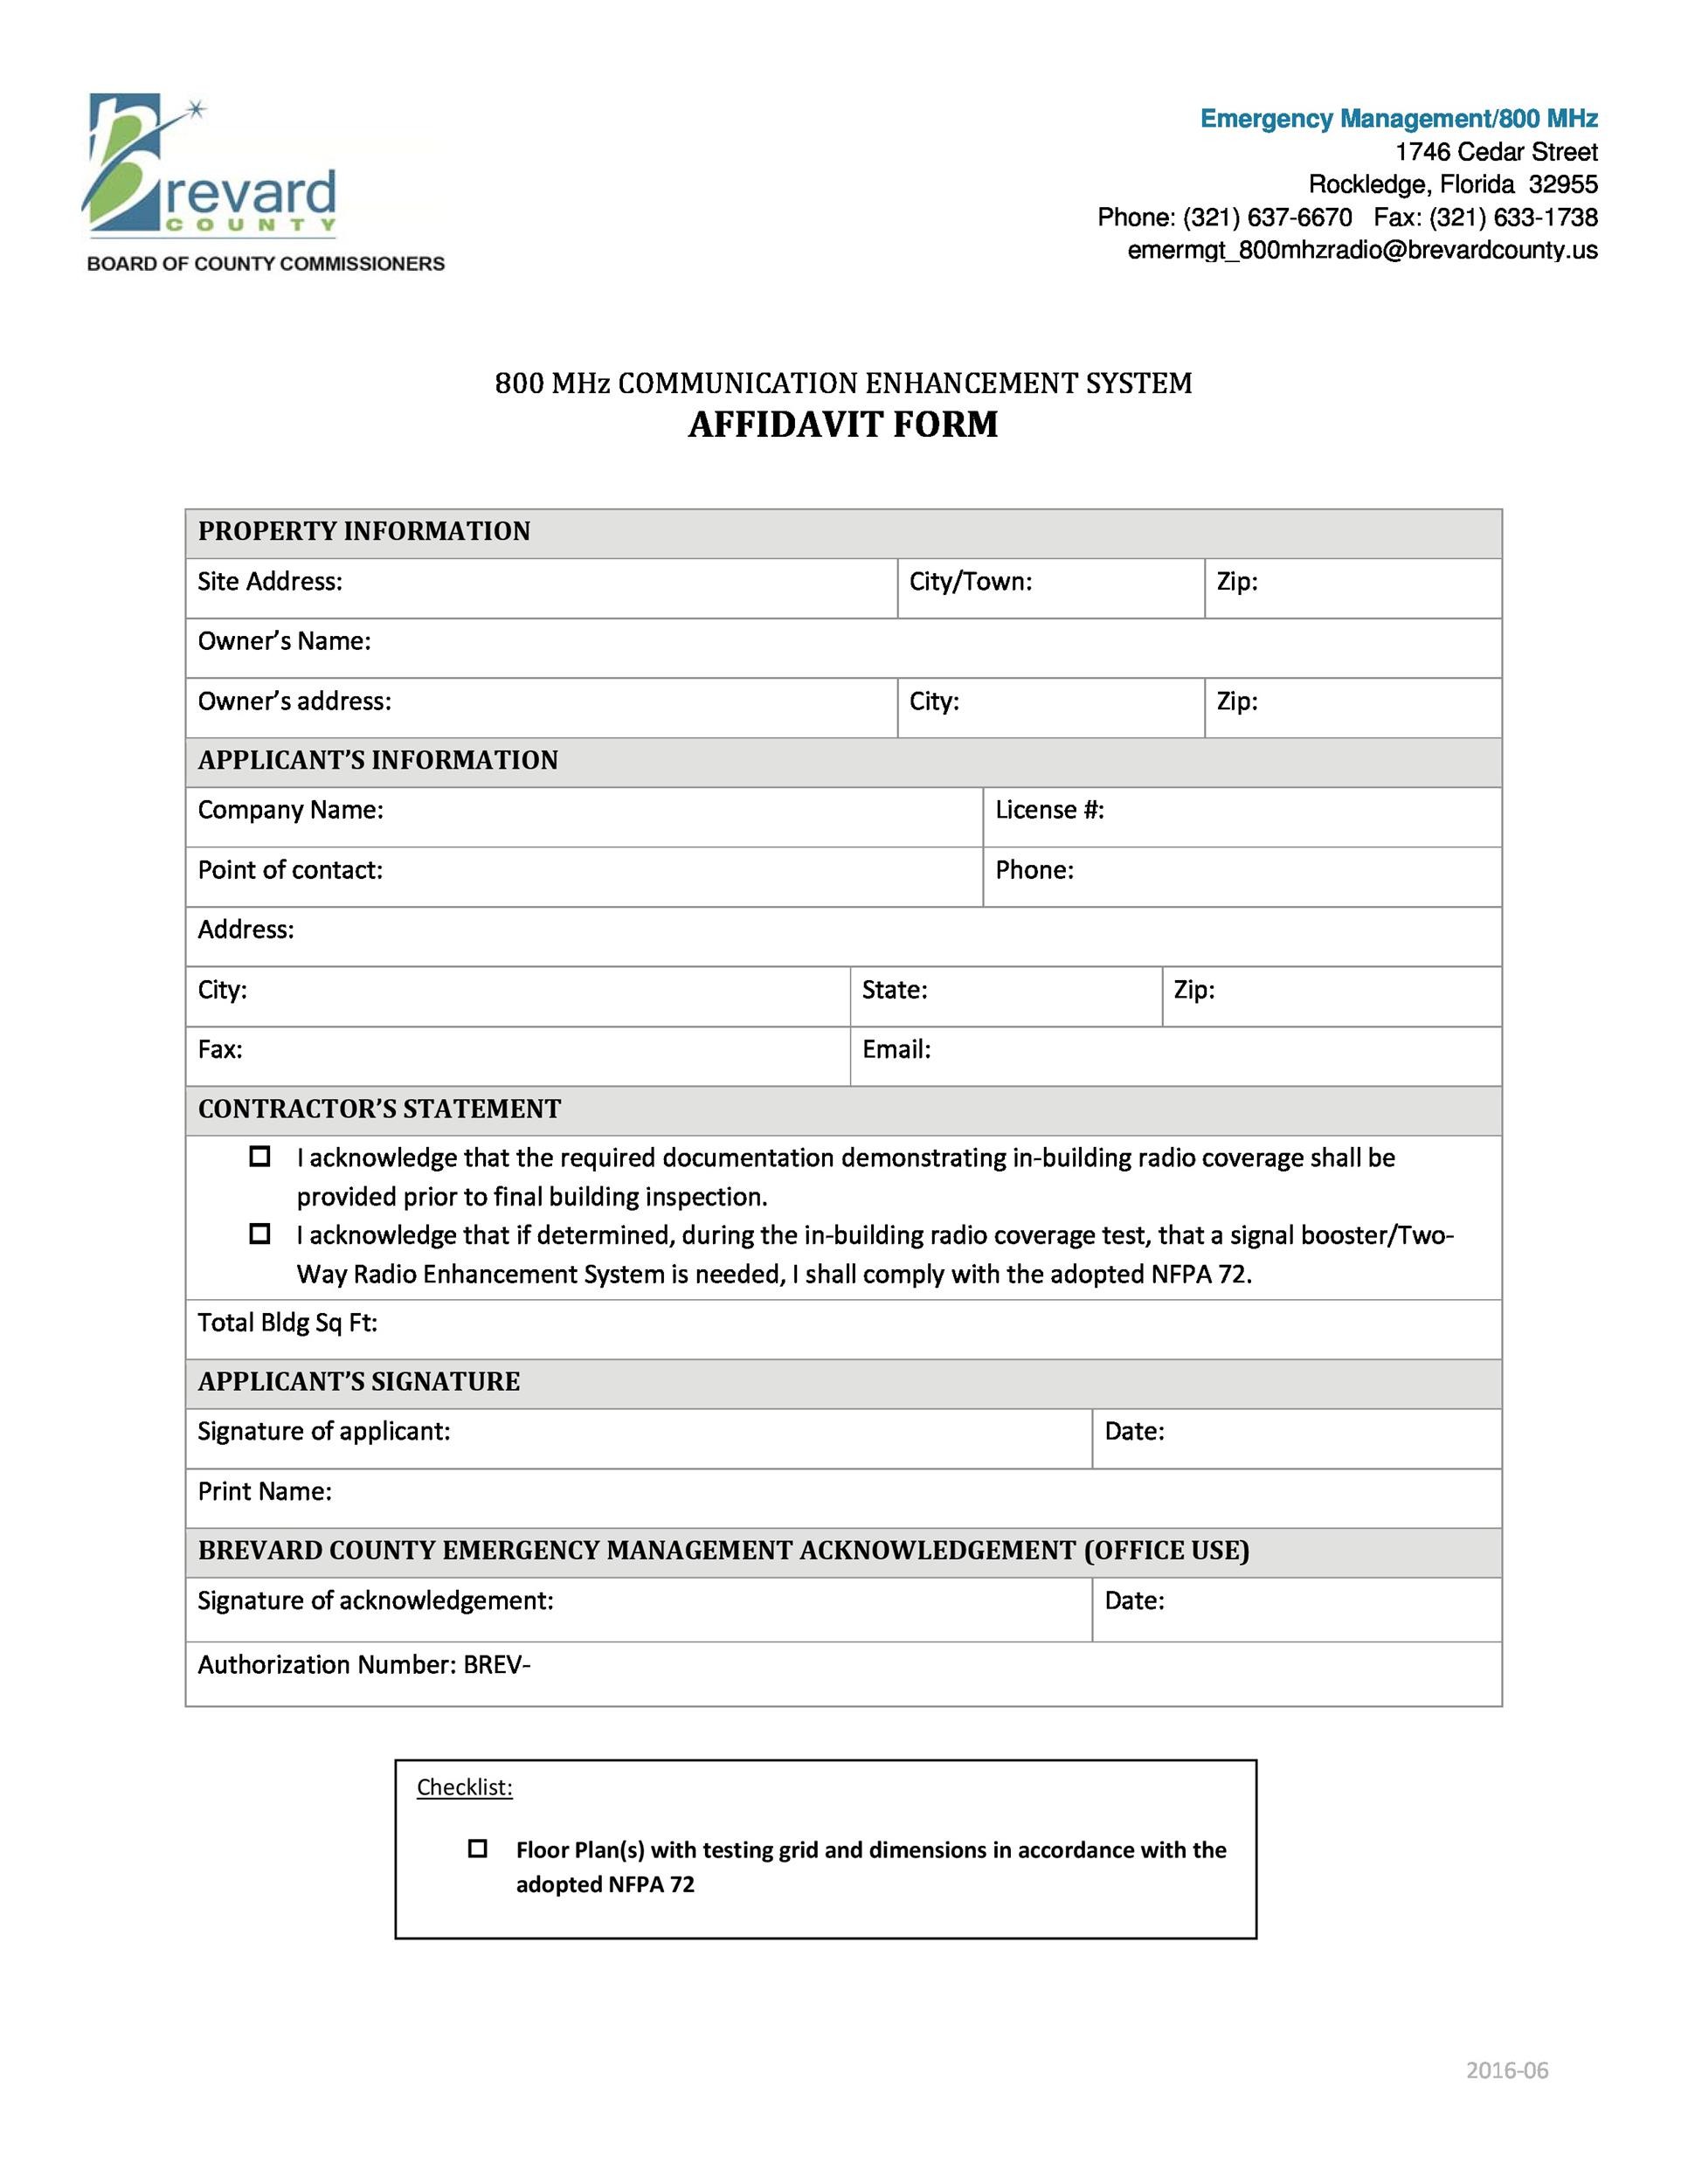 Free affidavit form 03